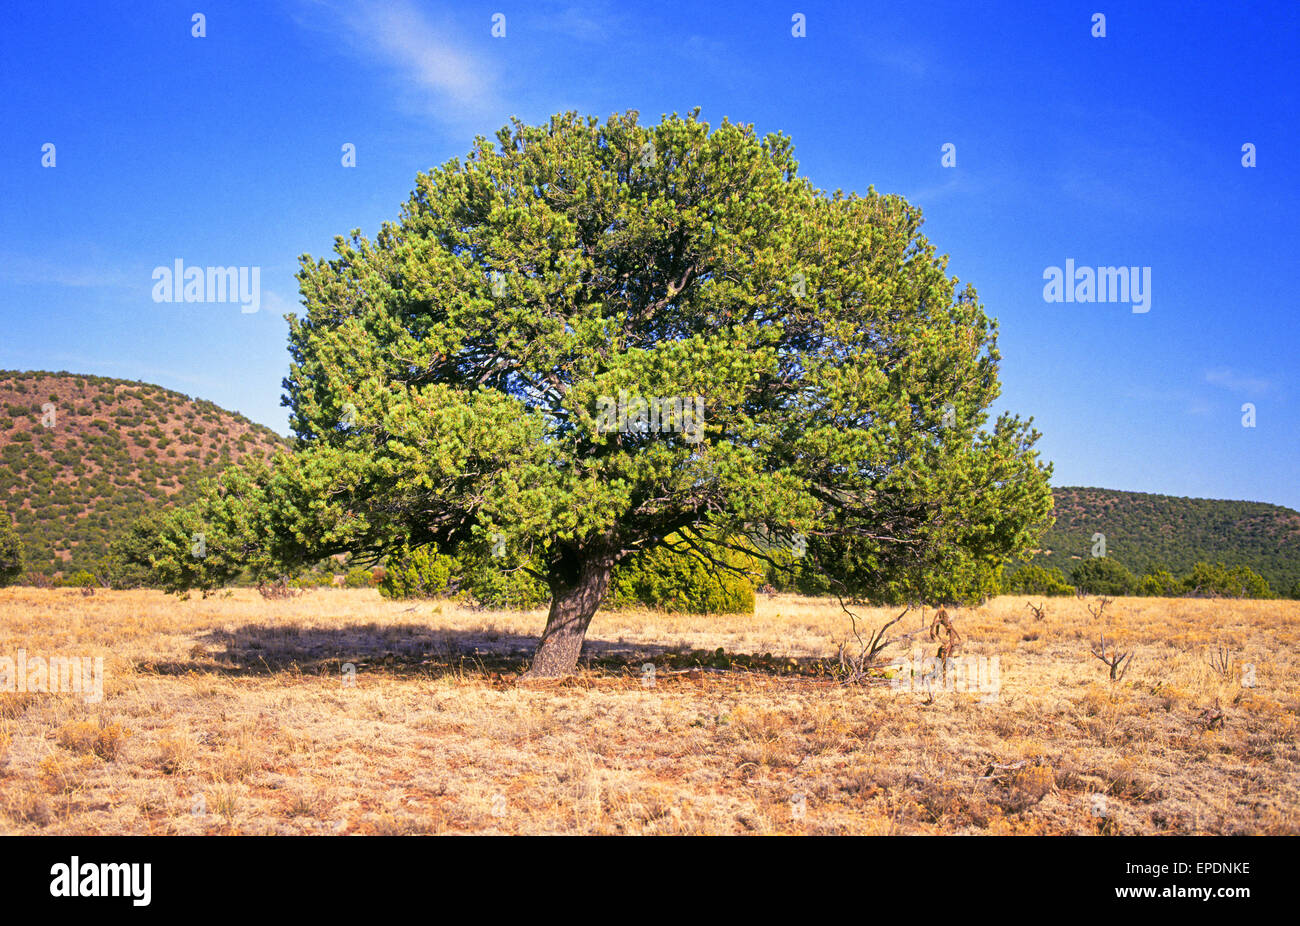 New Mexico State Tree Stock Photos & New Mexico State Tree ...